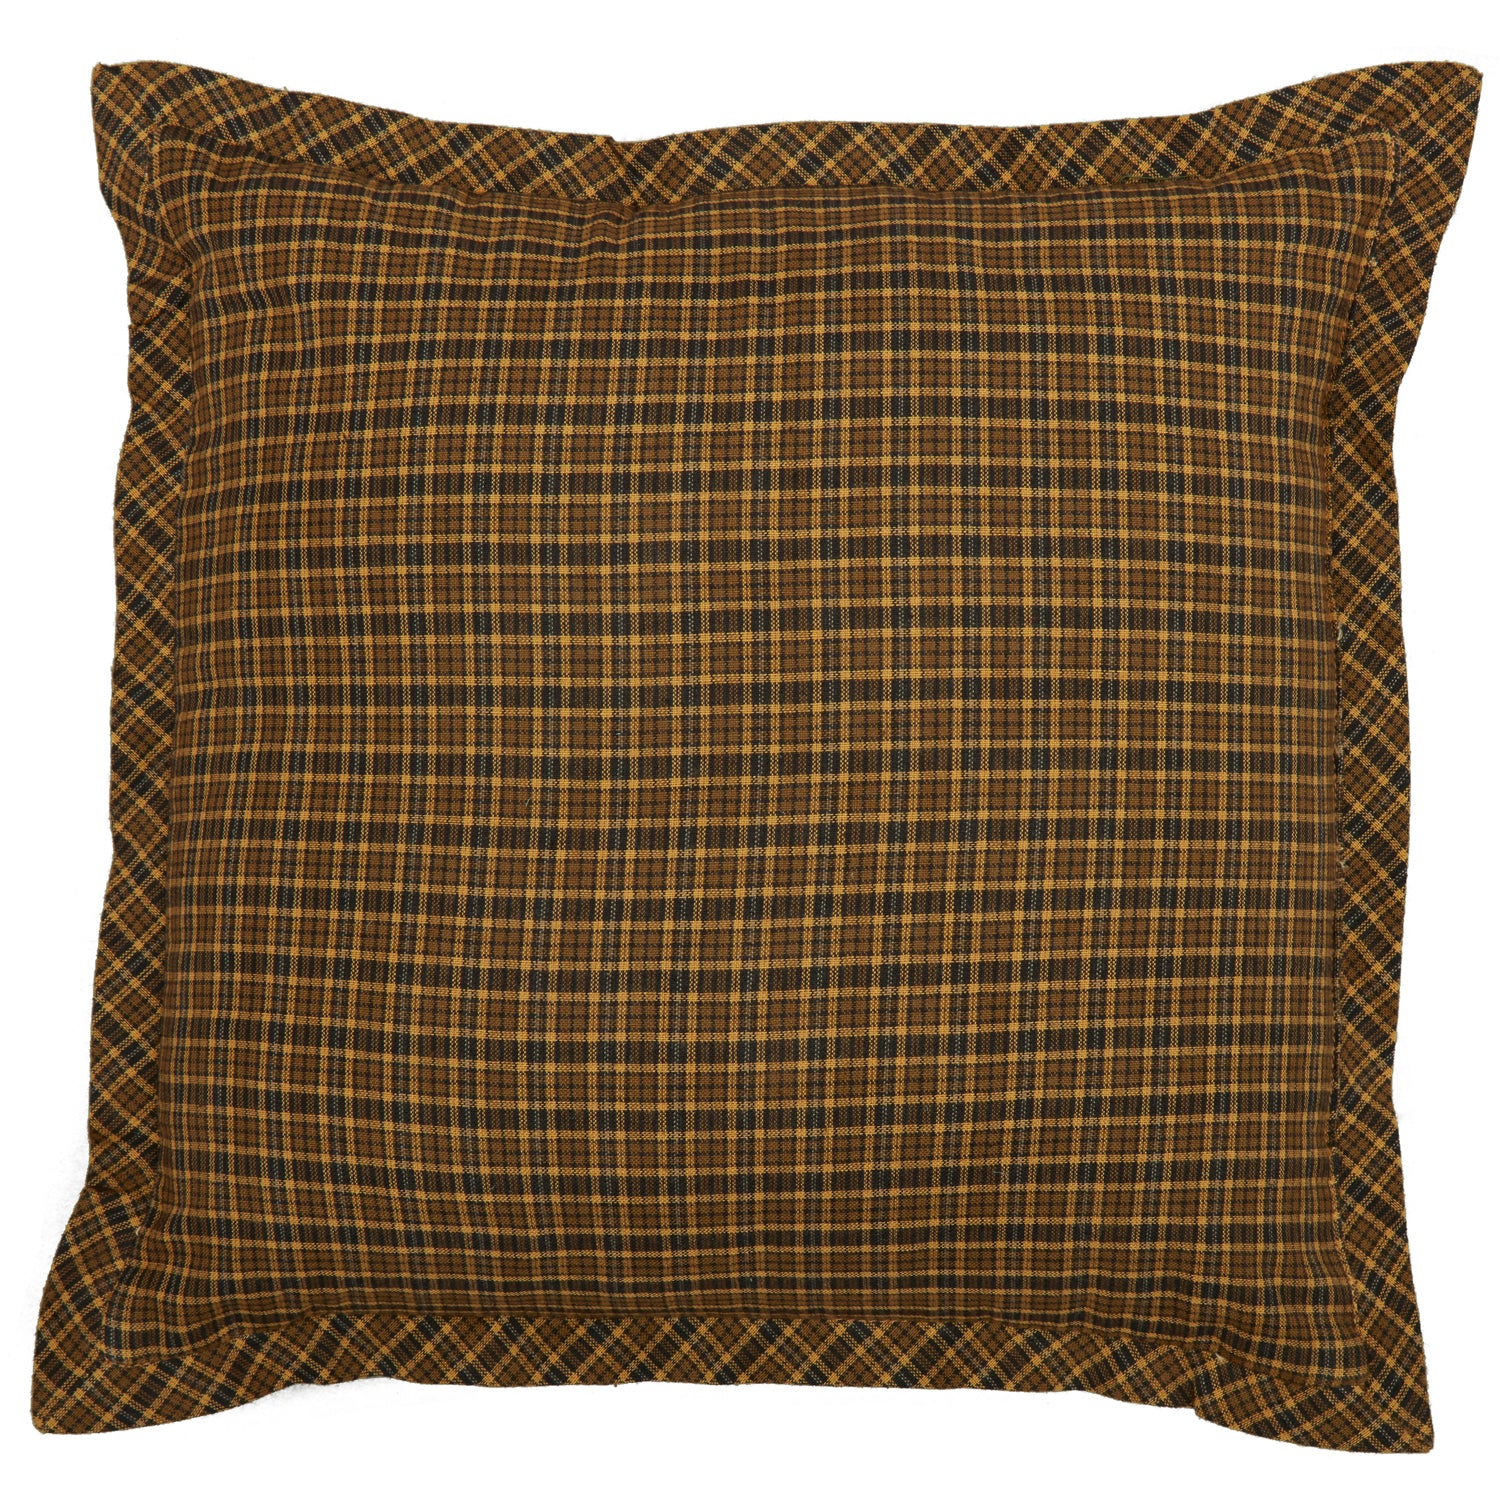 Rustic Throw Pillows Throw Pillows Decorative Throw Pillows 